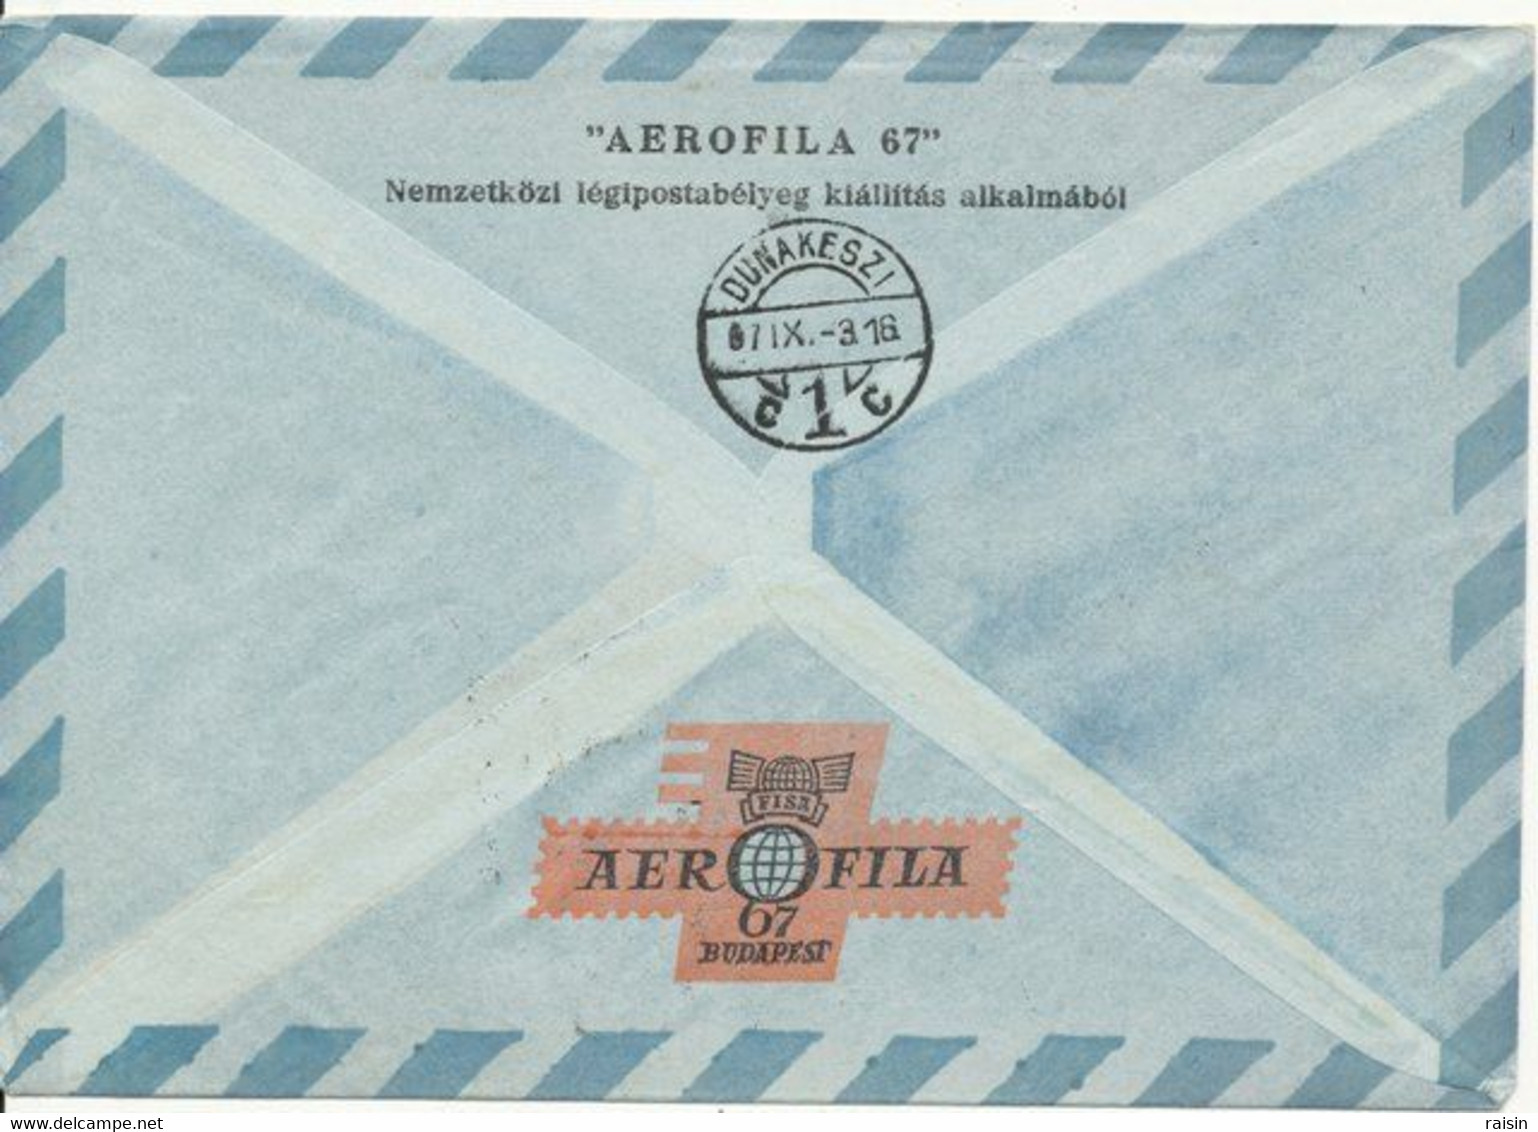 Hongrie 1967 "AEROFILA 67" Lettre Ayant Circulé Par Ballon N° 9787 TBE - Briefe U. Dokumente